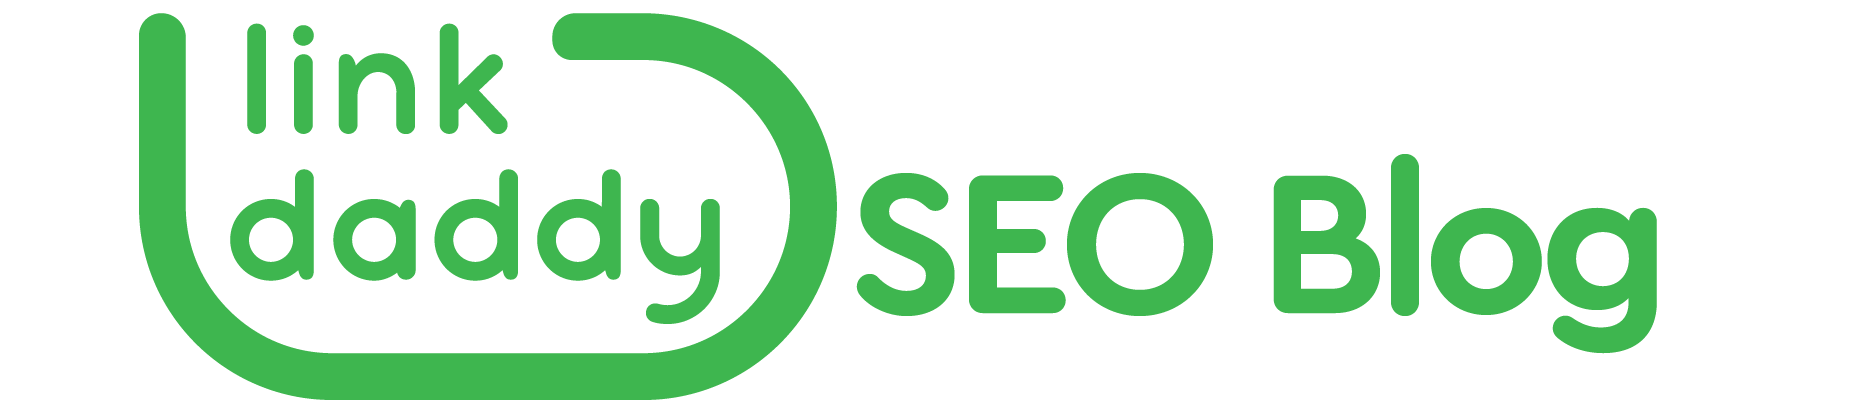 https://storage.googleapis.com/cloudsites/seo-services/861n5hkjy/img/cropped-linkdaddy-seoblog-logo.png